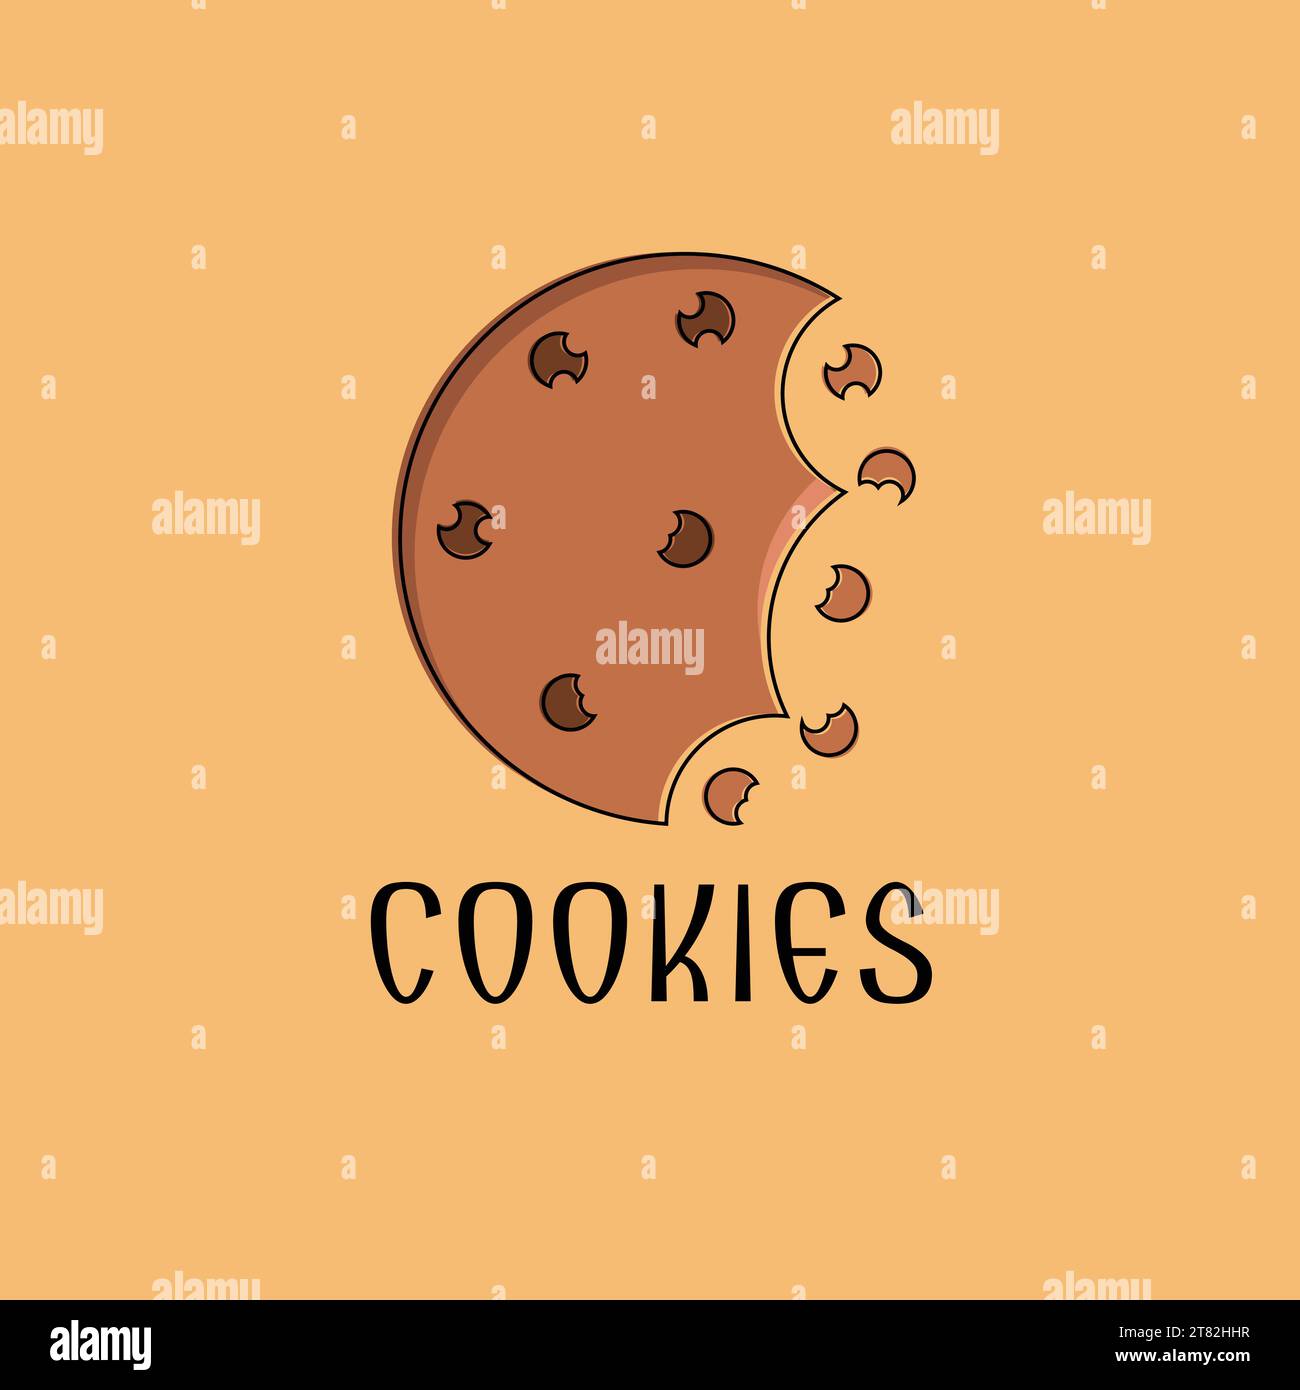 Illustarion design vettoriale del logo cookie. Illustrazione Vettoriale